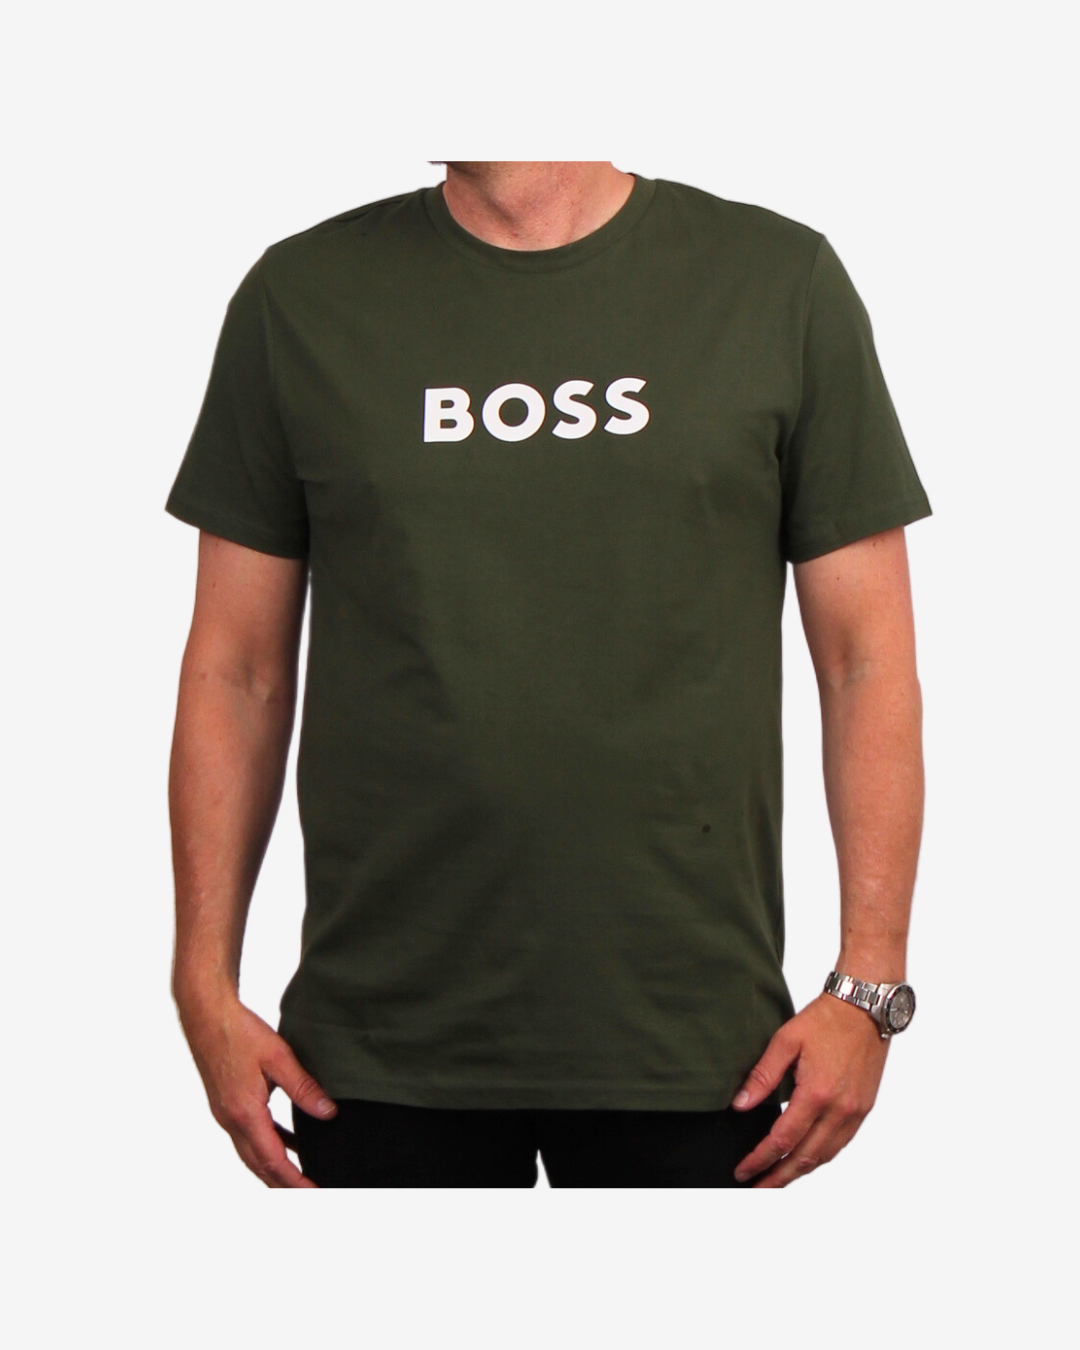 Se Hugo Boss T-Shirt i økologisk bomuld - Grøn - Str. L - Modish.dk hos Modish.dk